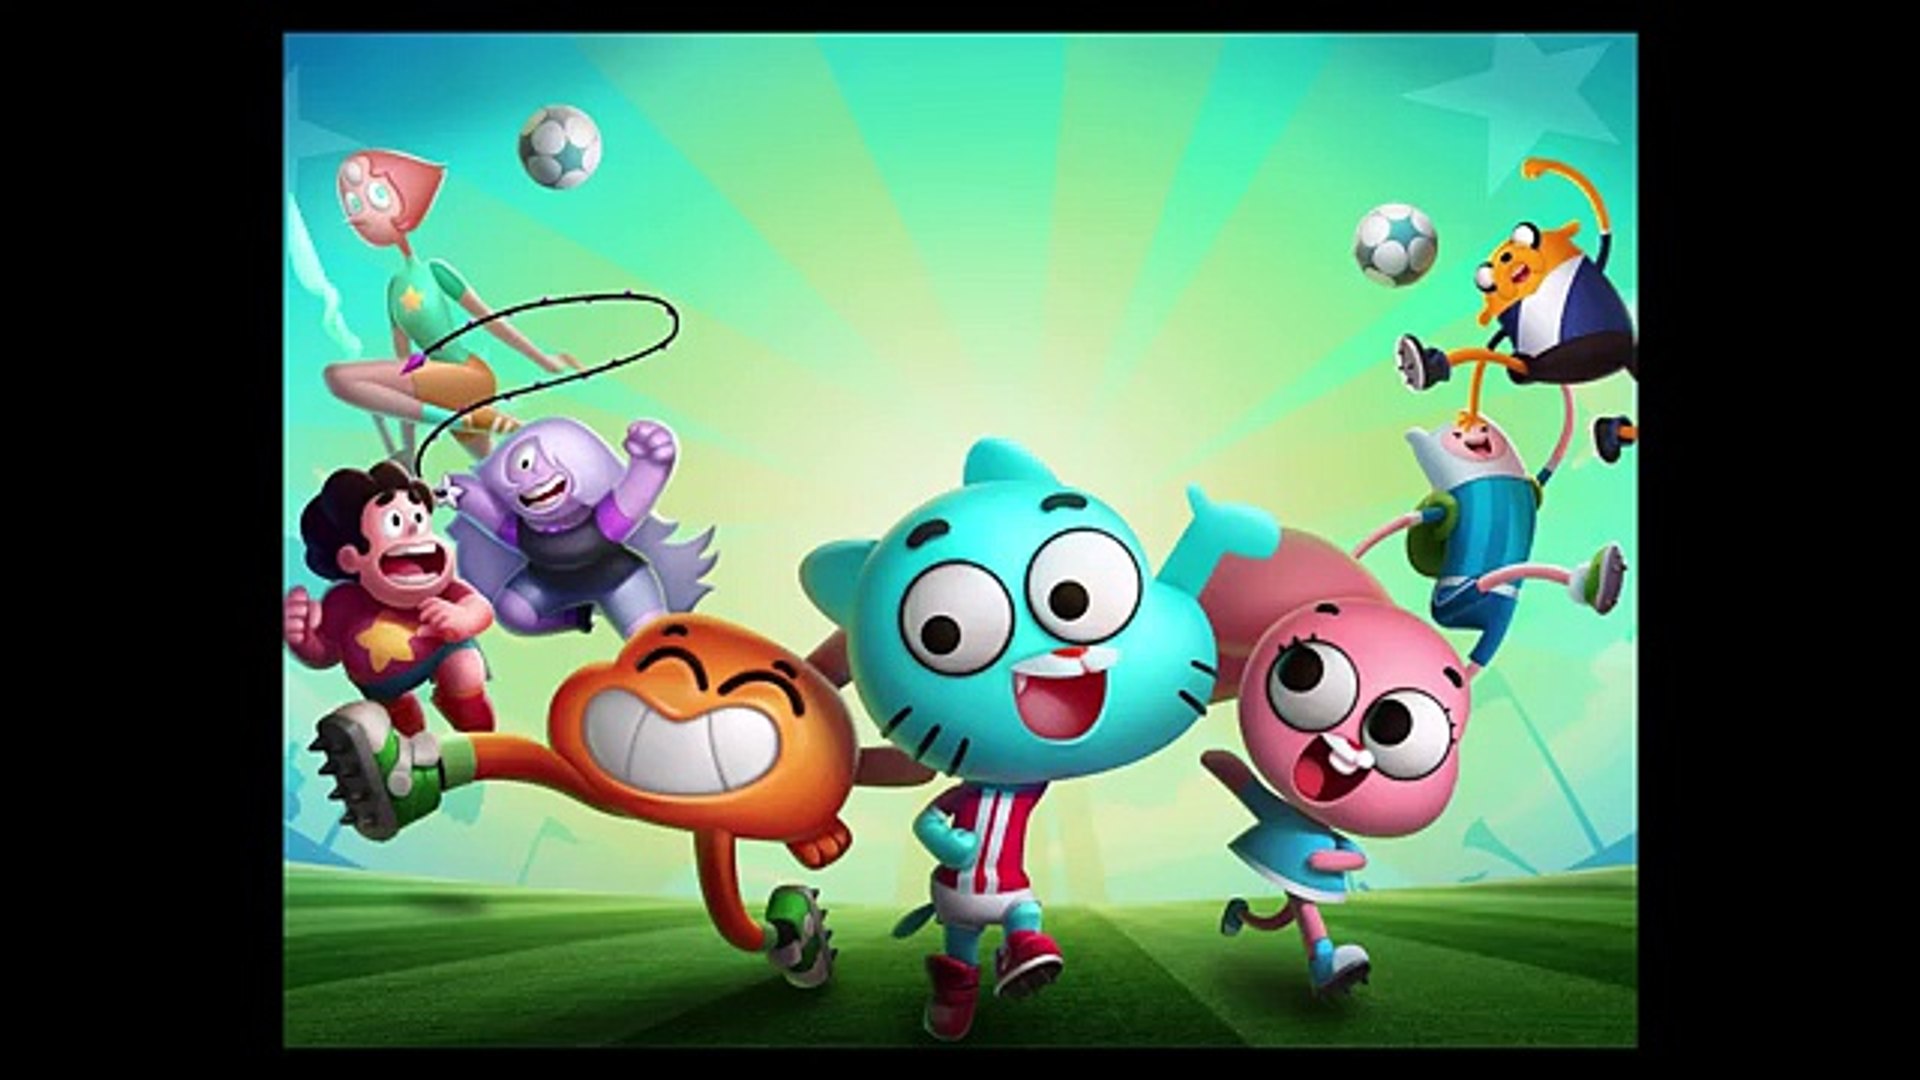 Cartoon Network Superstar Soccer Goal - Steven vs Pearl - iOS / Android - Walktrough Video